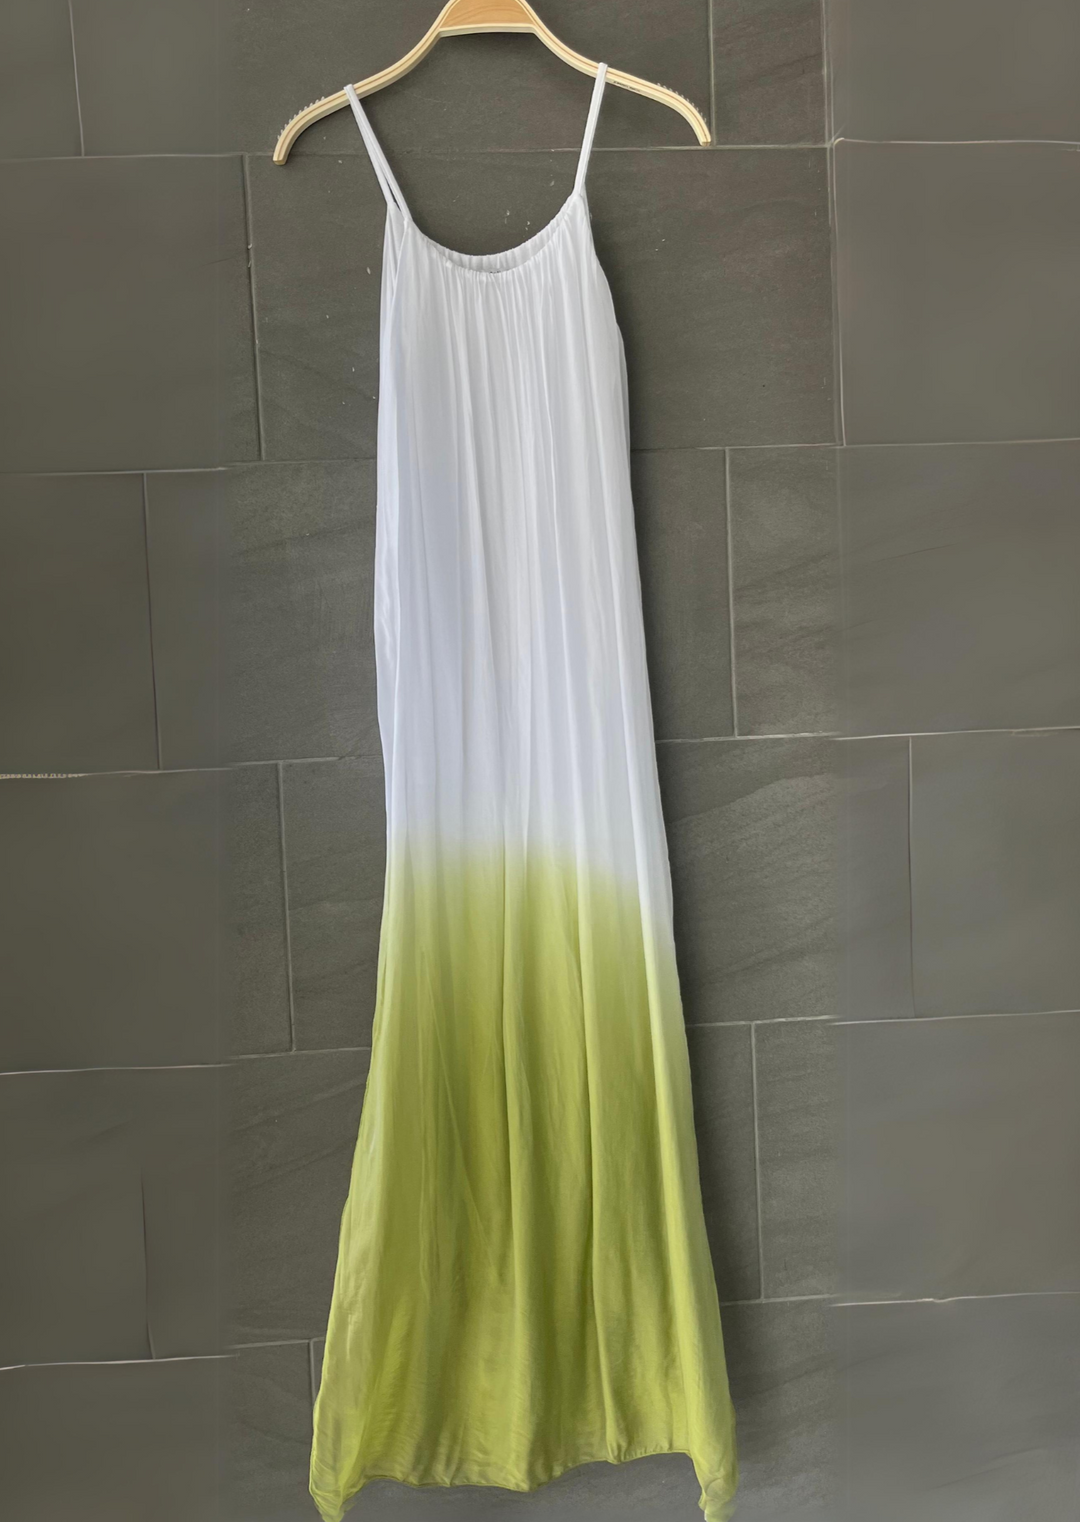 Millie Silk Ombre Maxi Dress (Avocado)